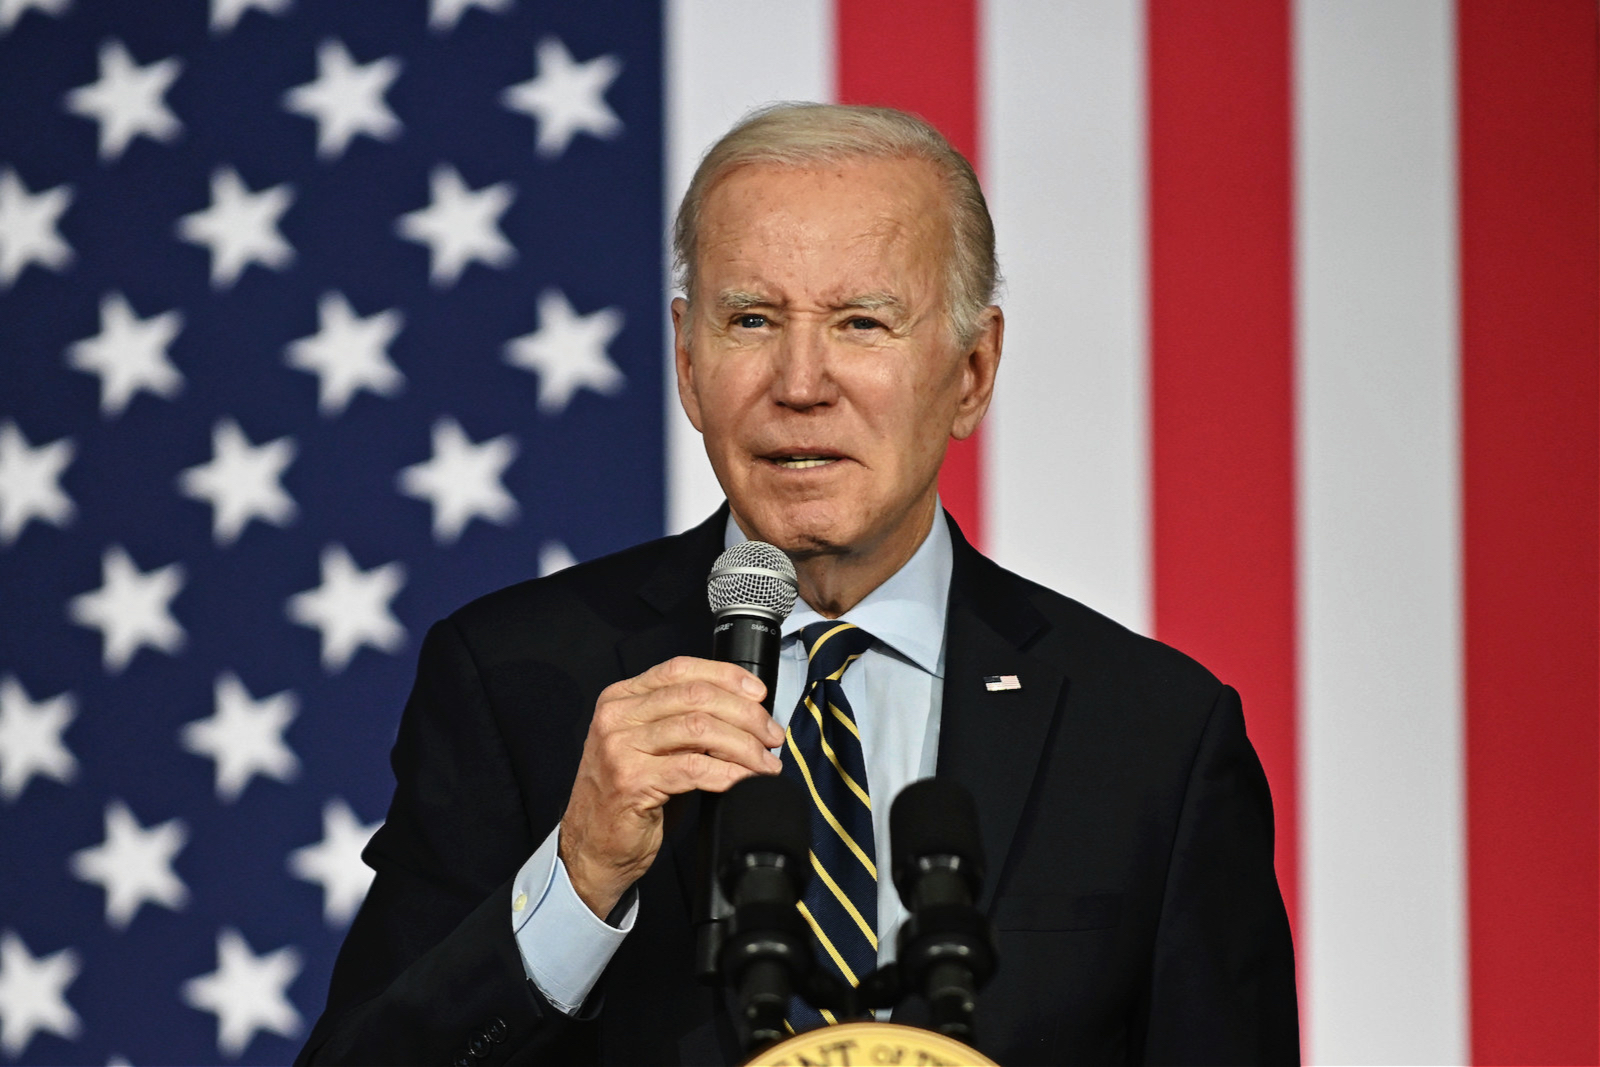 President Joe Biden speaking in Maryland